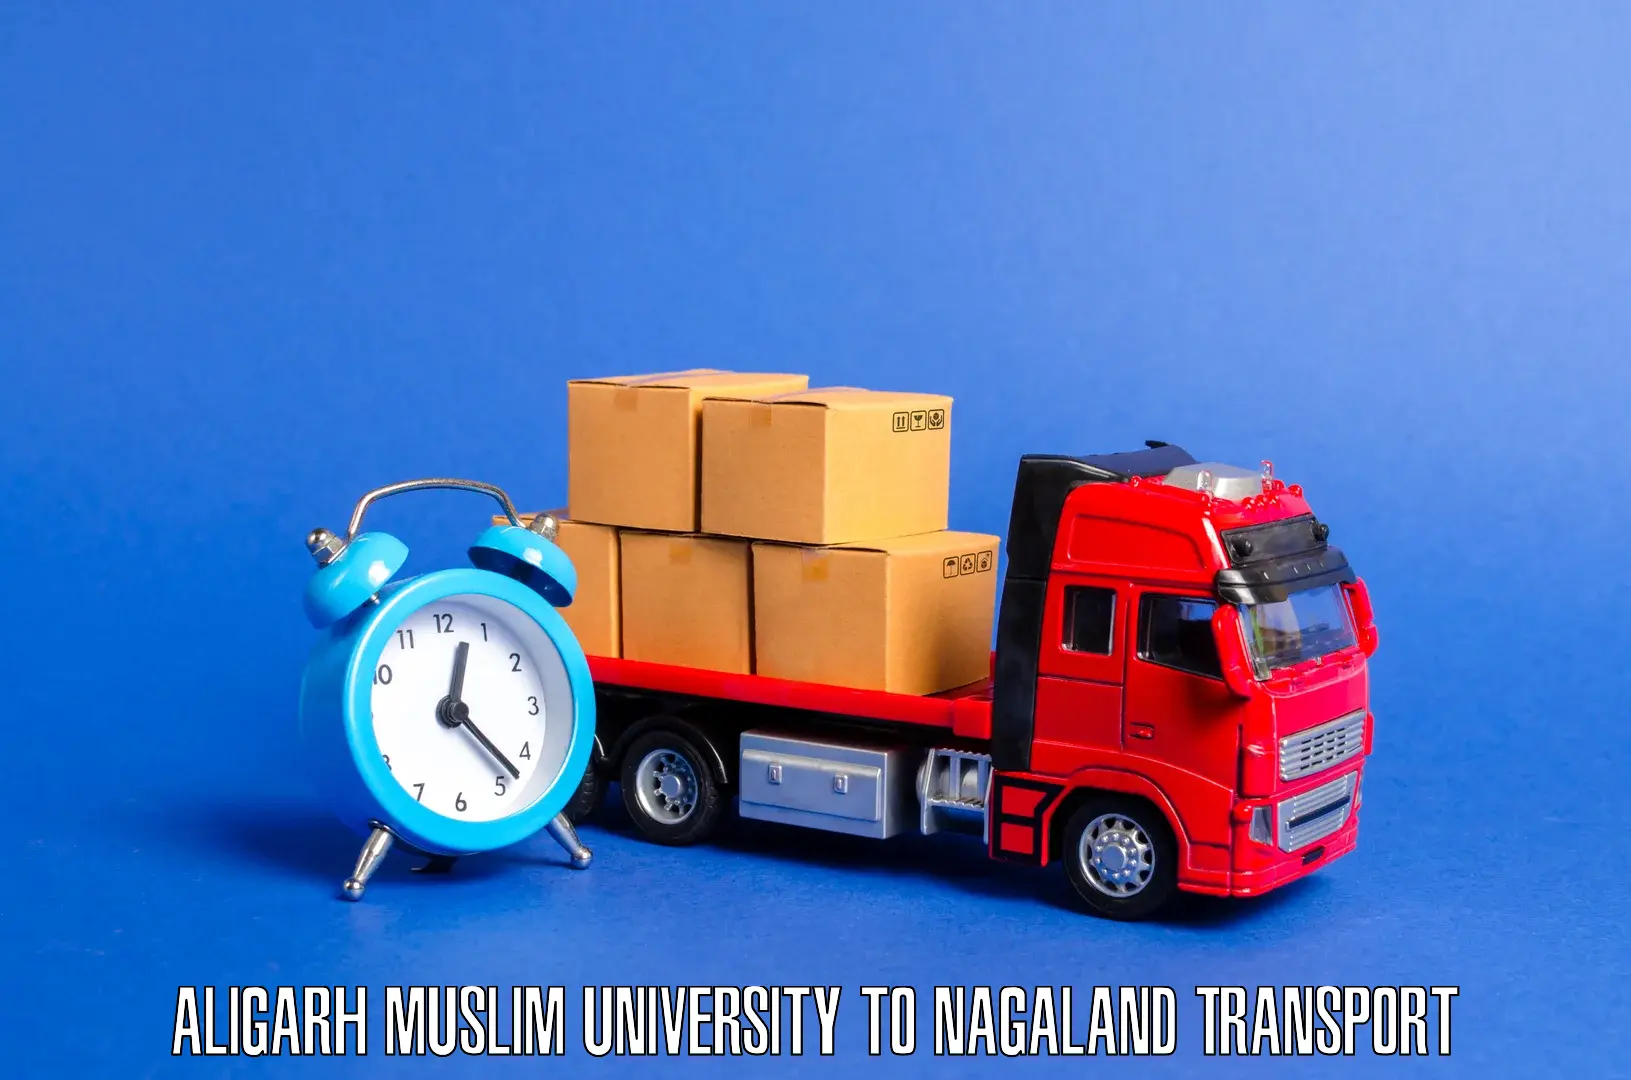 Cycle transportation service Aligarh Muslim University to Nagaland